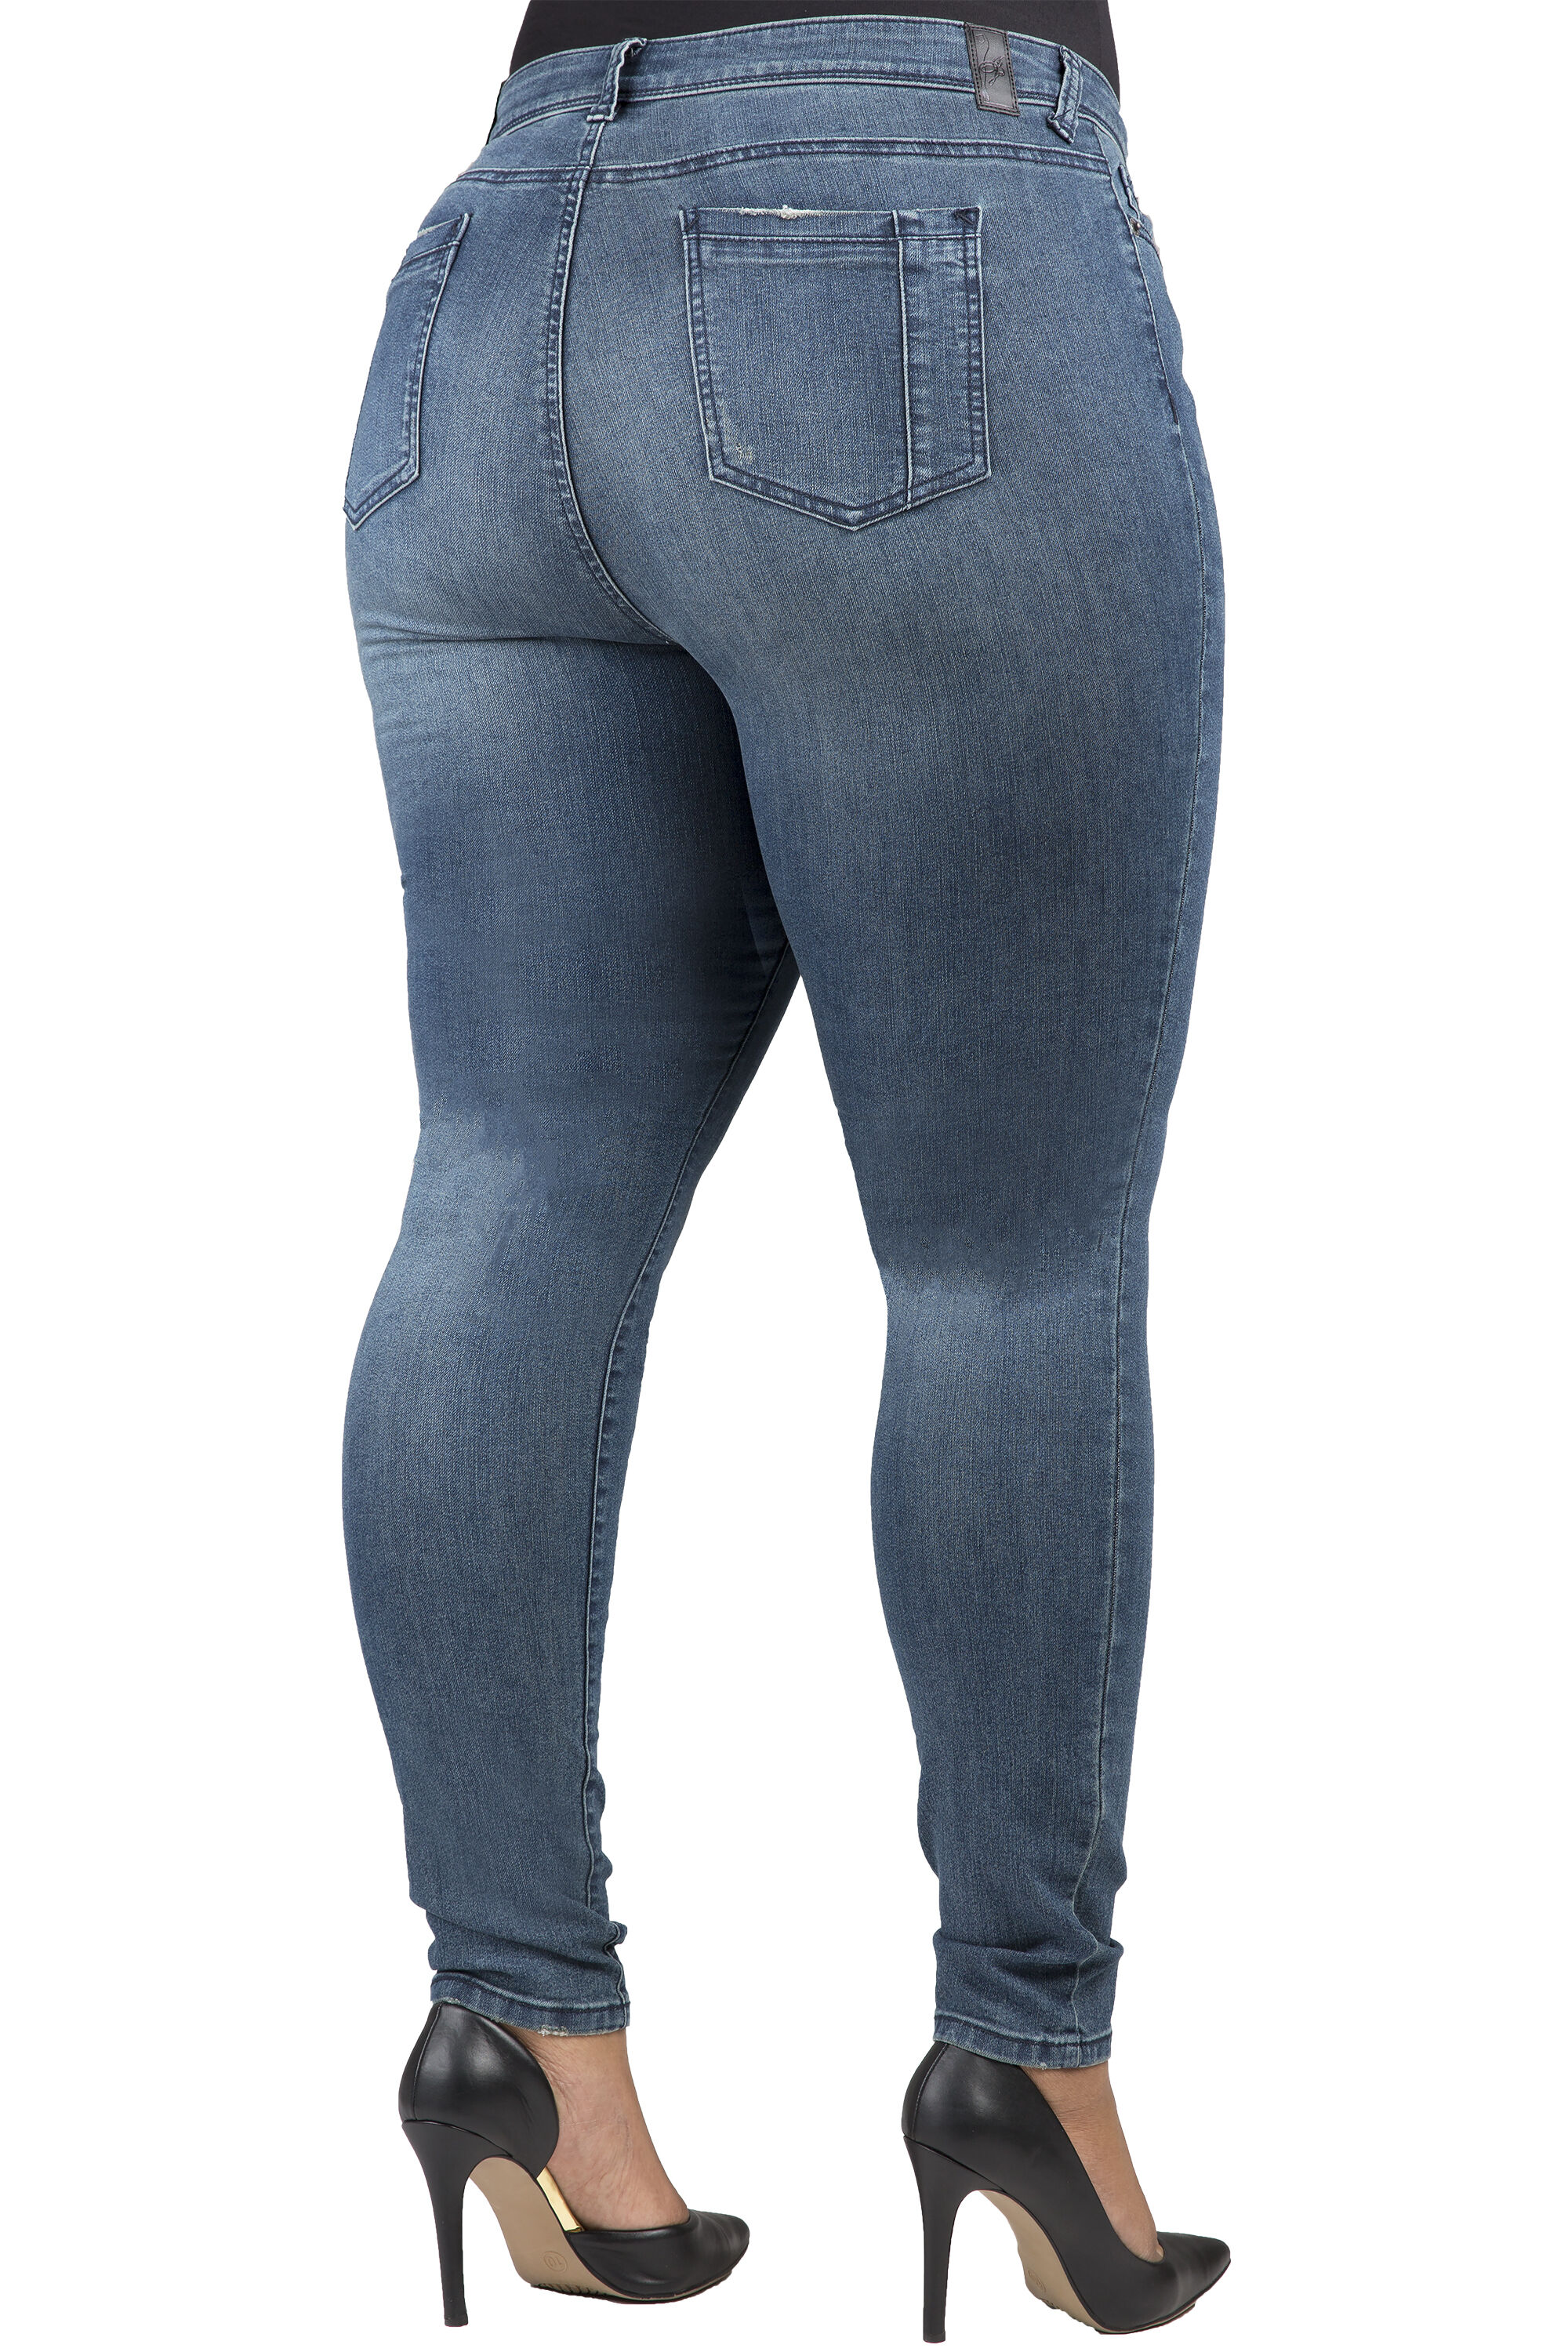 Plus Size Women's Curvy Fit Blue Denim Five Pockets Skinny Jeans